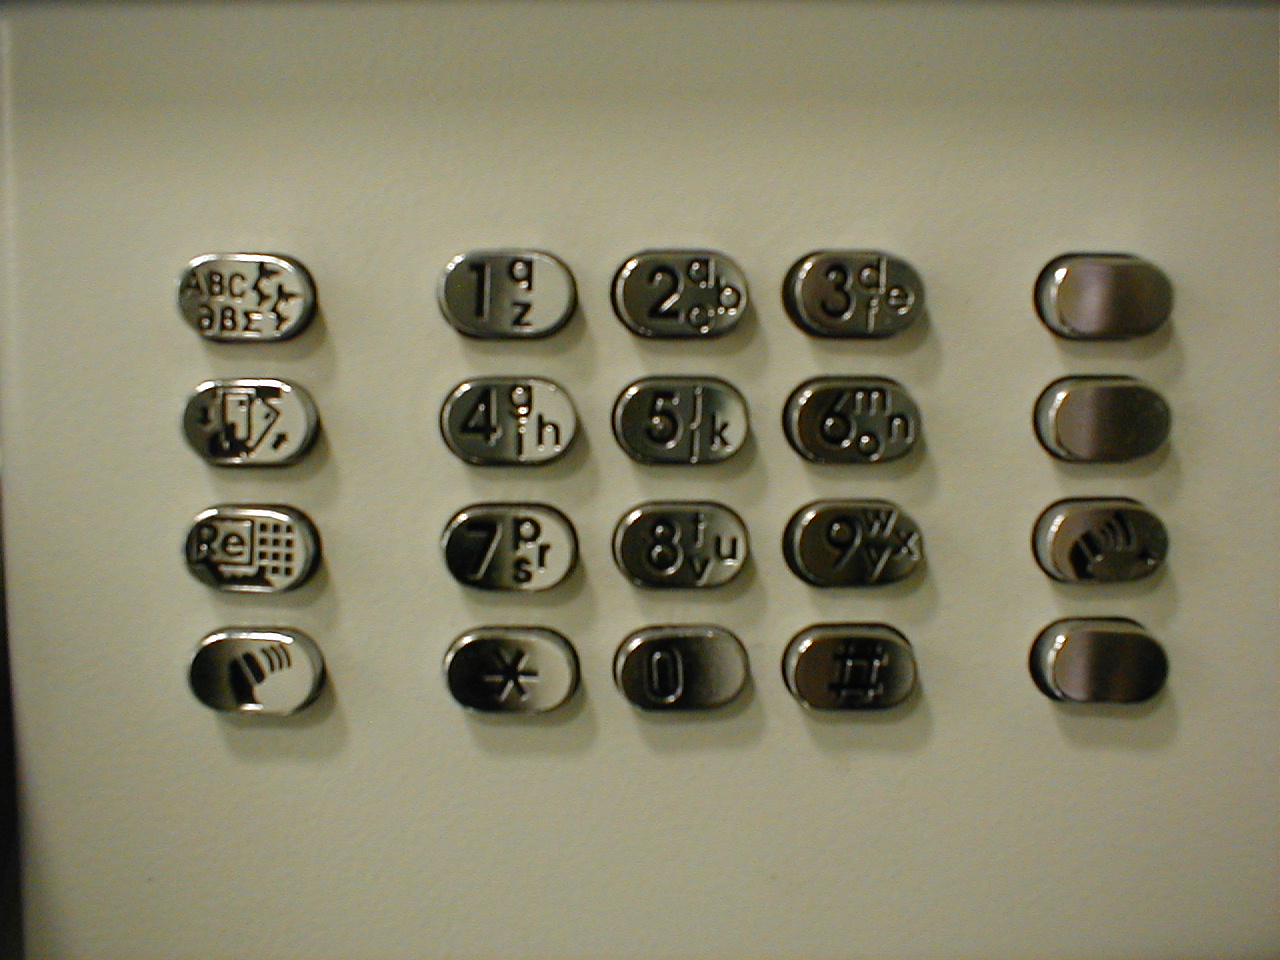 buttons chrome keys phone calling telephone dario